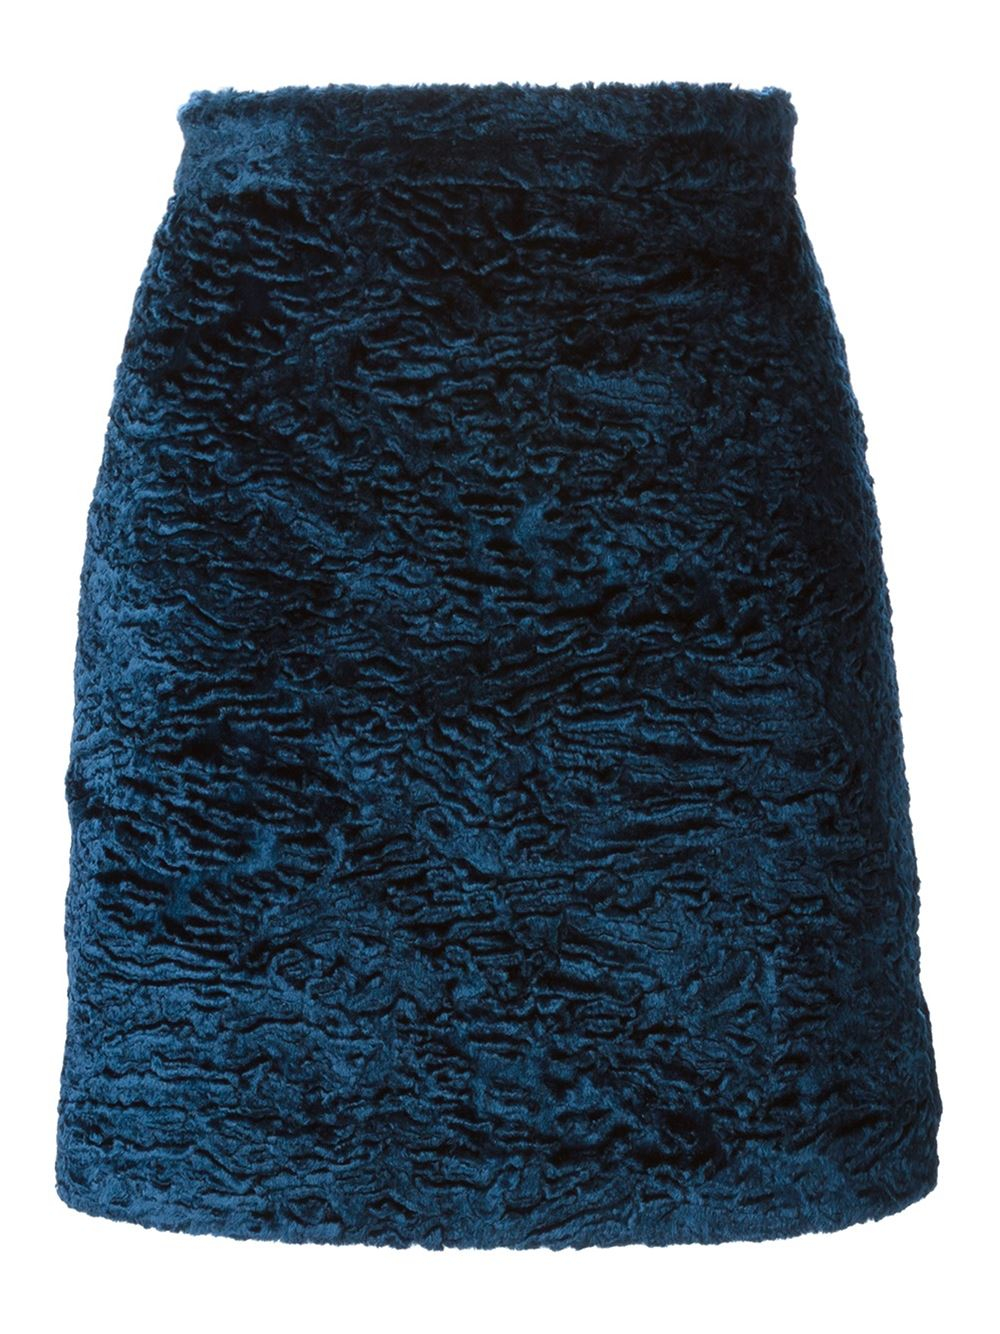 Lyst - Msgm Faux Fur Skirt in Blue